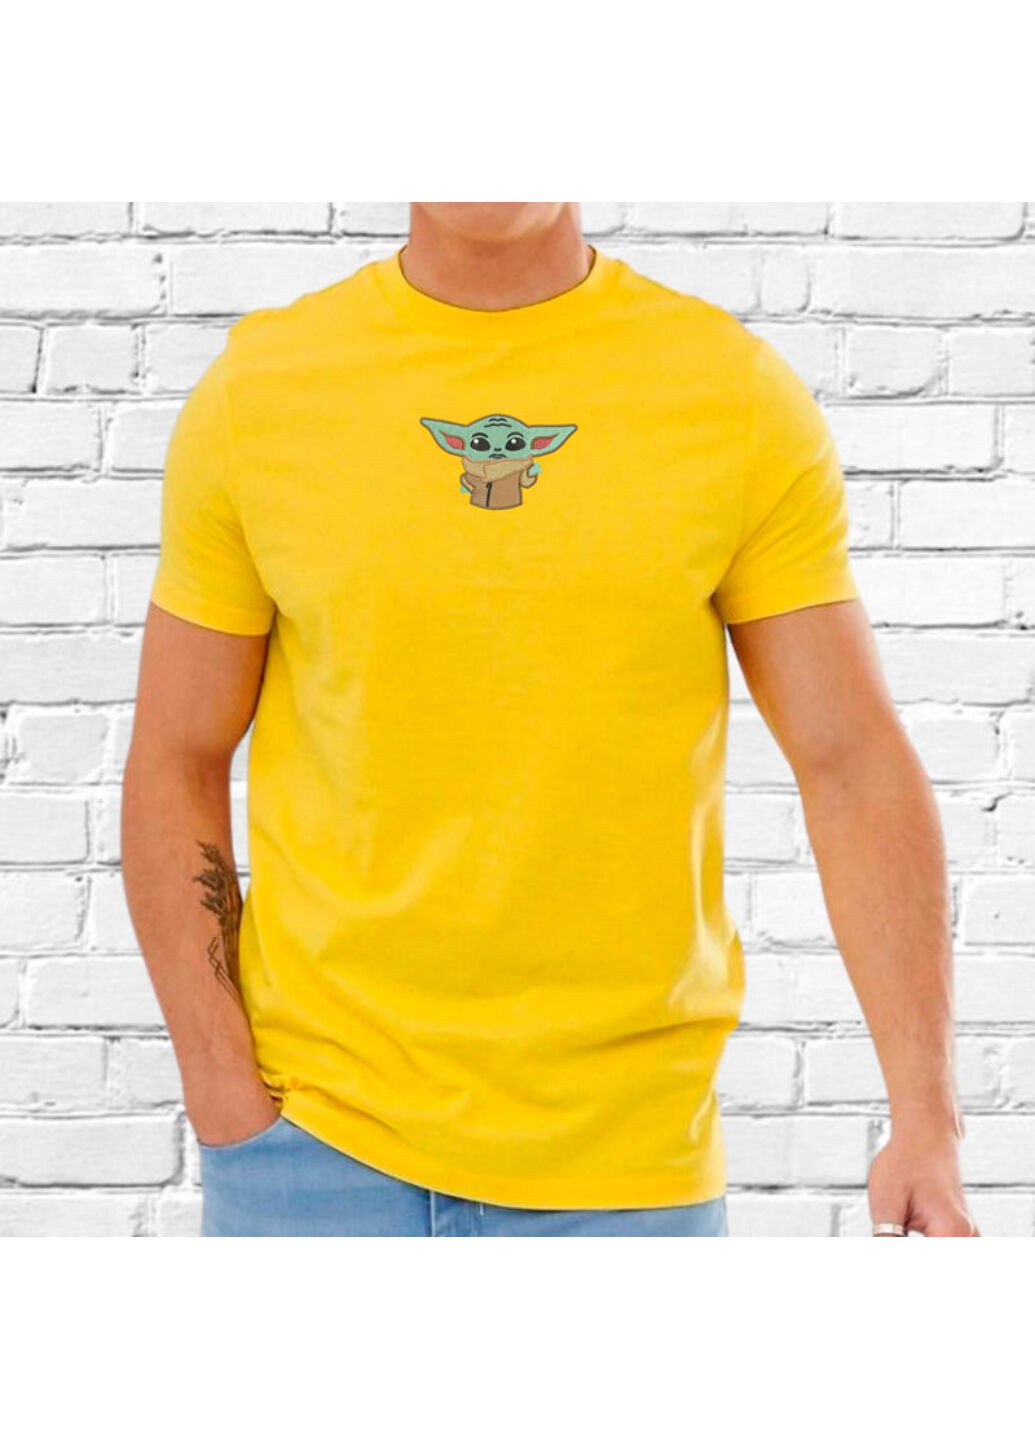 Желтая футболка з вишивкою йода (yoda) 09 мужская желтый m No Brand